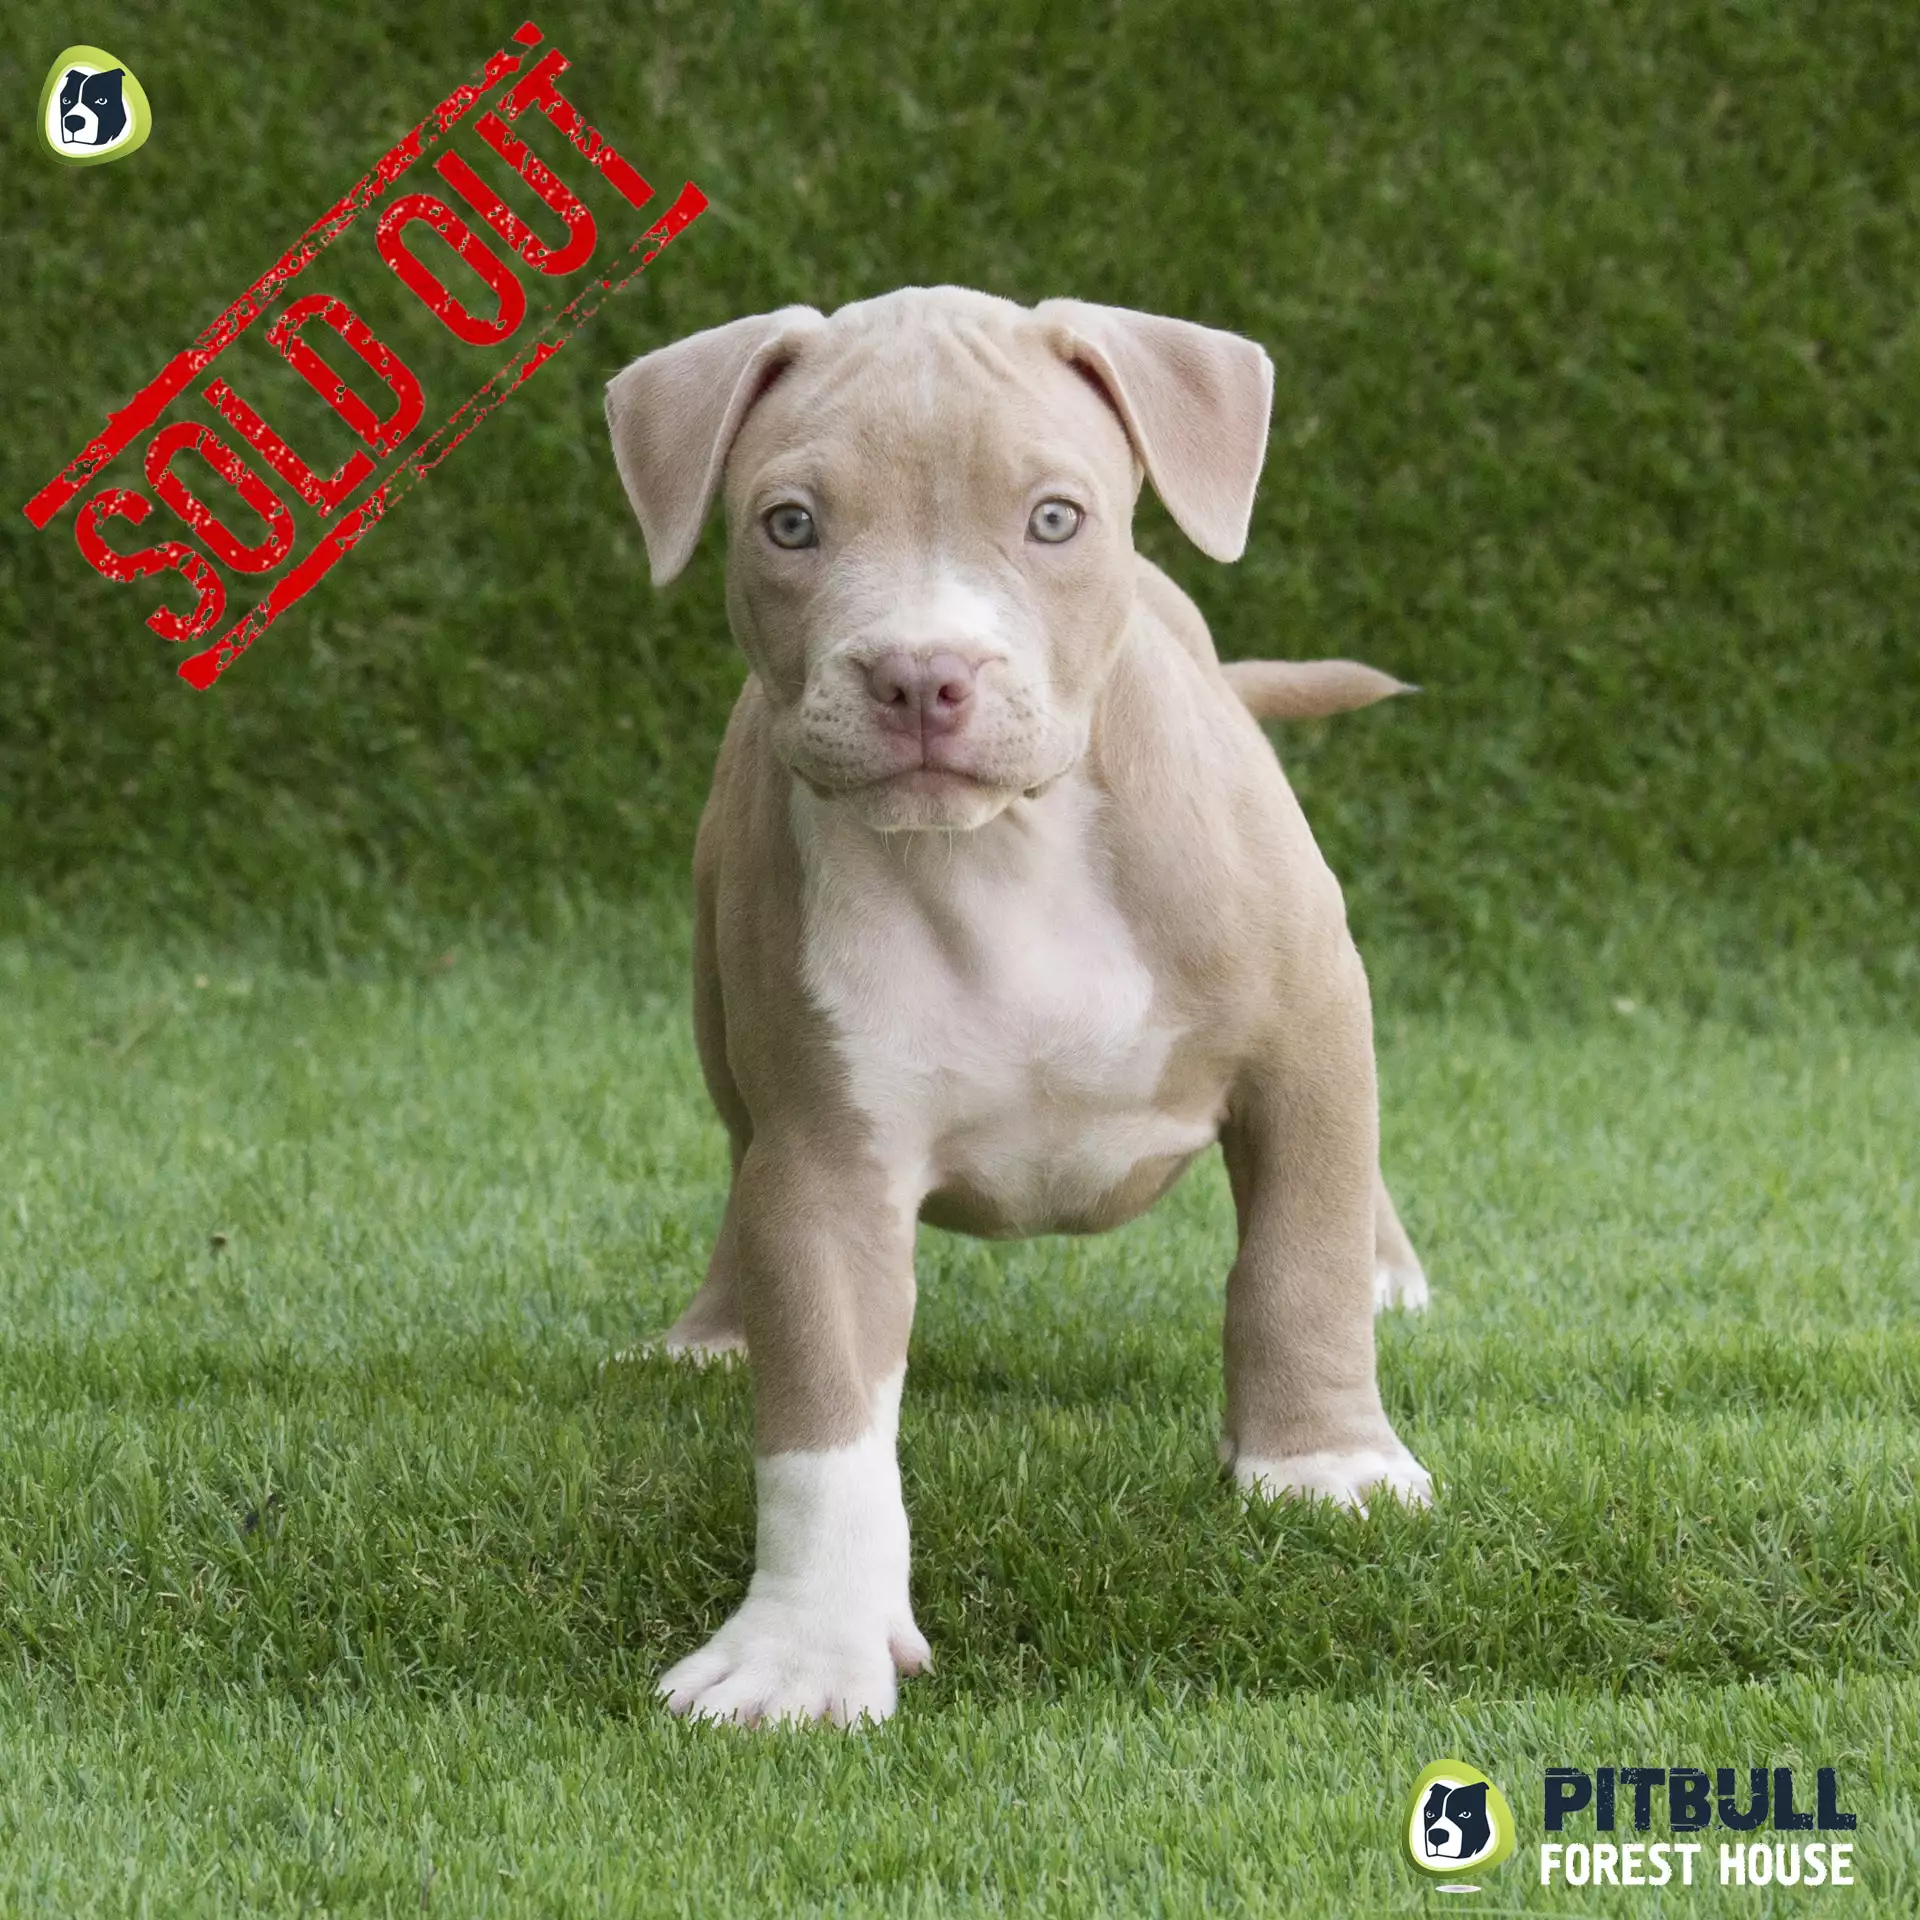 Pitbull Puppies For Sale American Pitbull Terrier Breeding Centre Pitbull Forest House